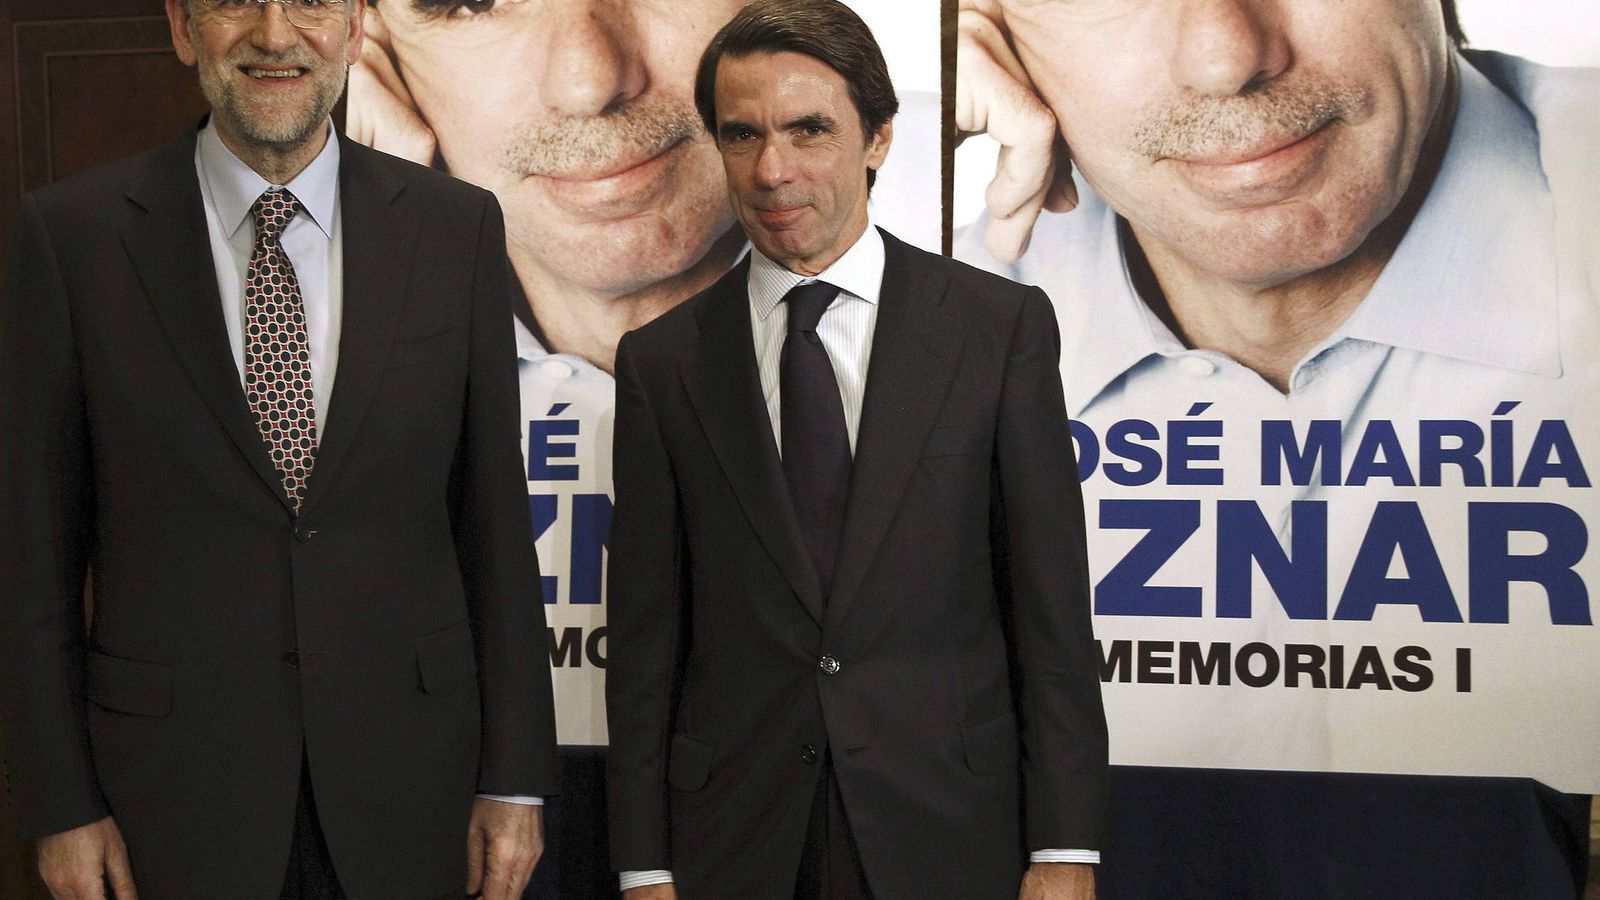 Foto: Aznar presenta sus 'Memorias' en Mdrid en 2012. Foto: J.J.Guillen/EFE